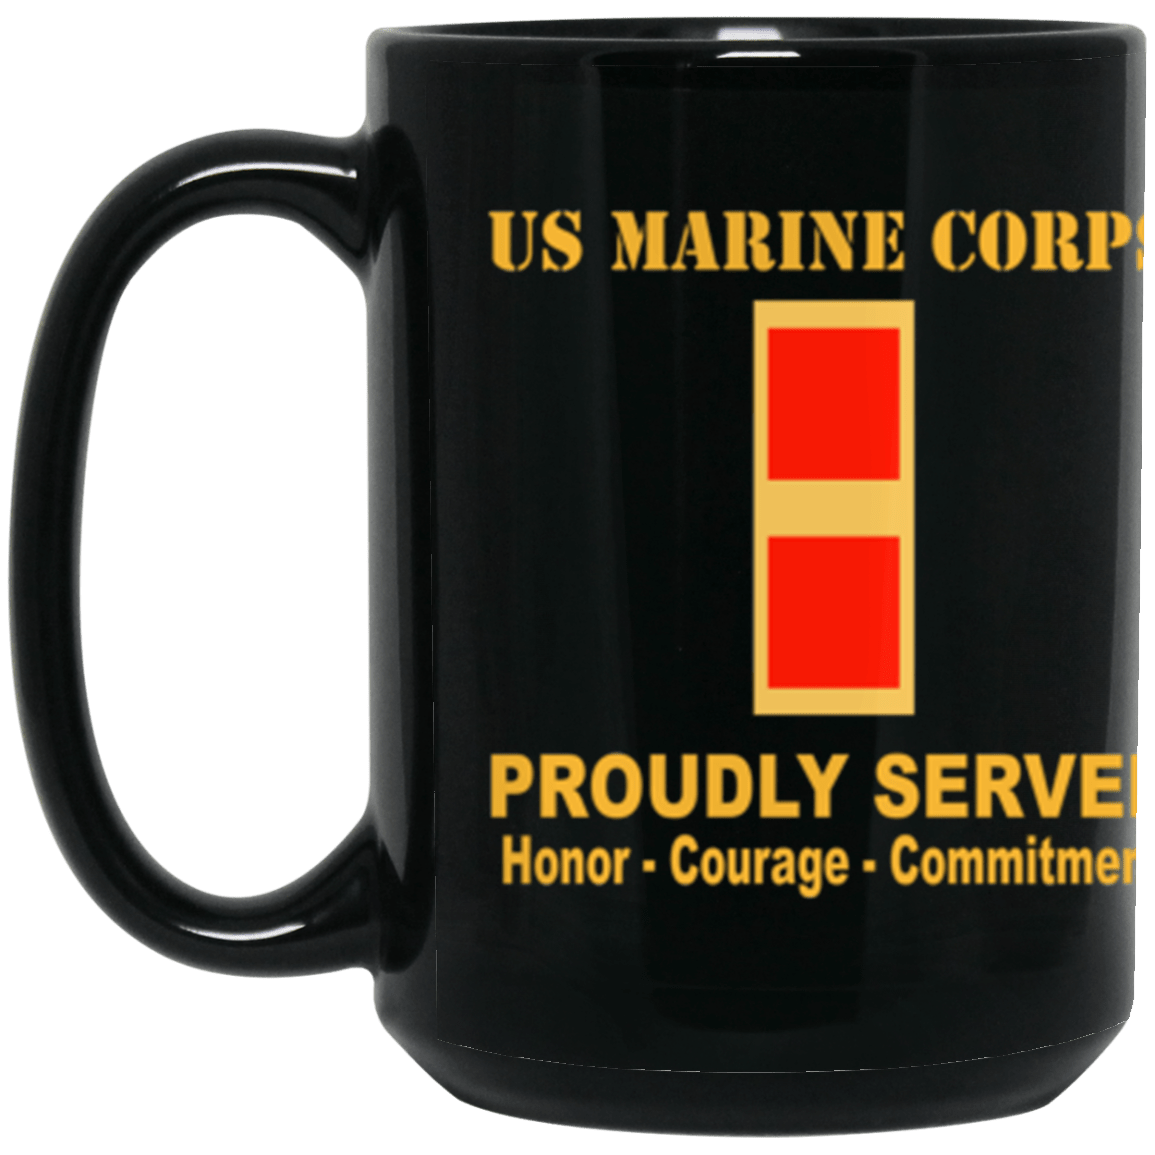 USMC W-1 Warrant Officer 1 WO1 WO1 Warrant Officer Ranks Proudly Served Core Values 15 oz. Black Mug